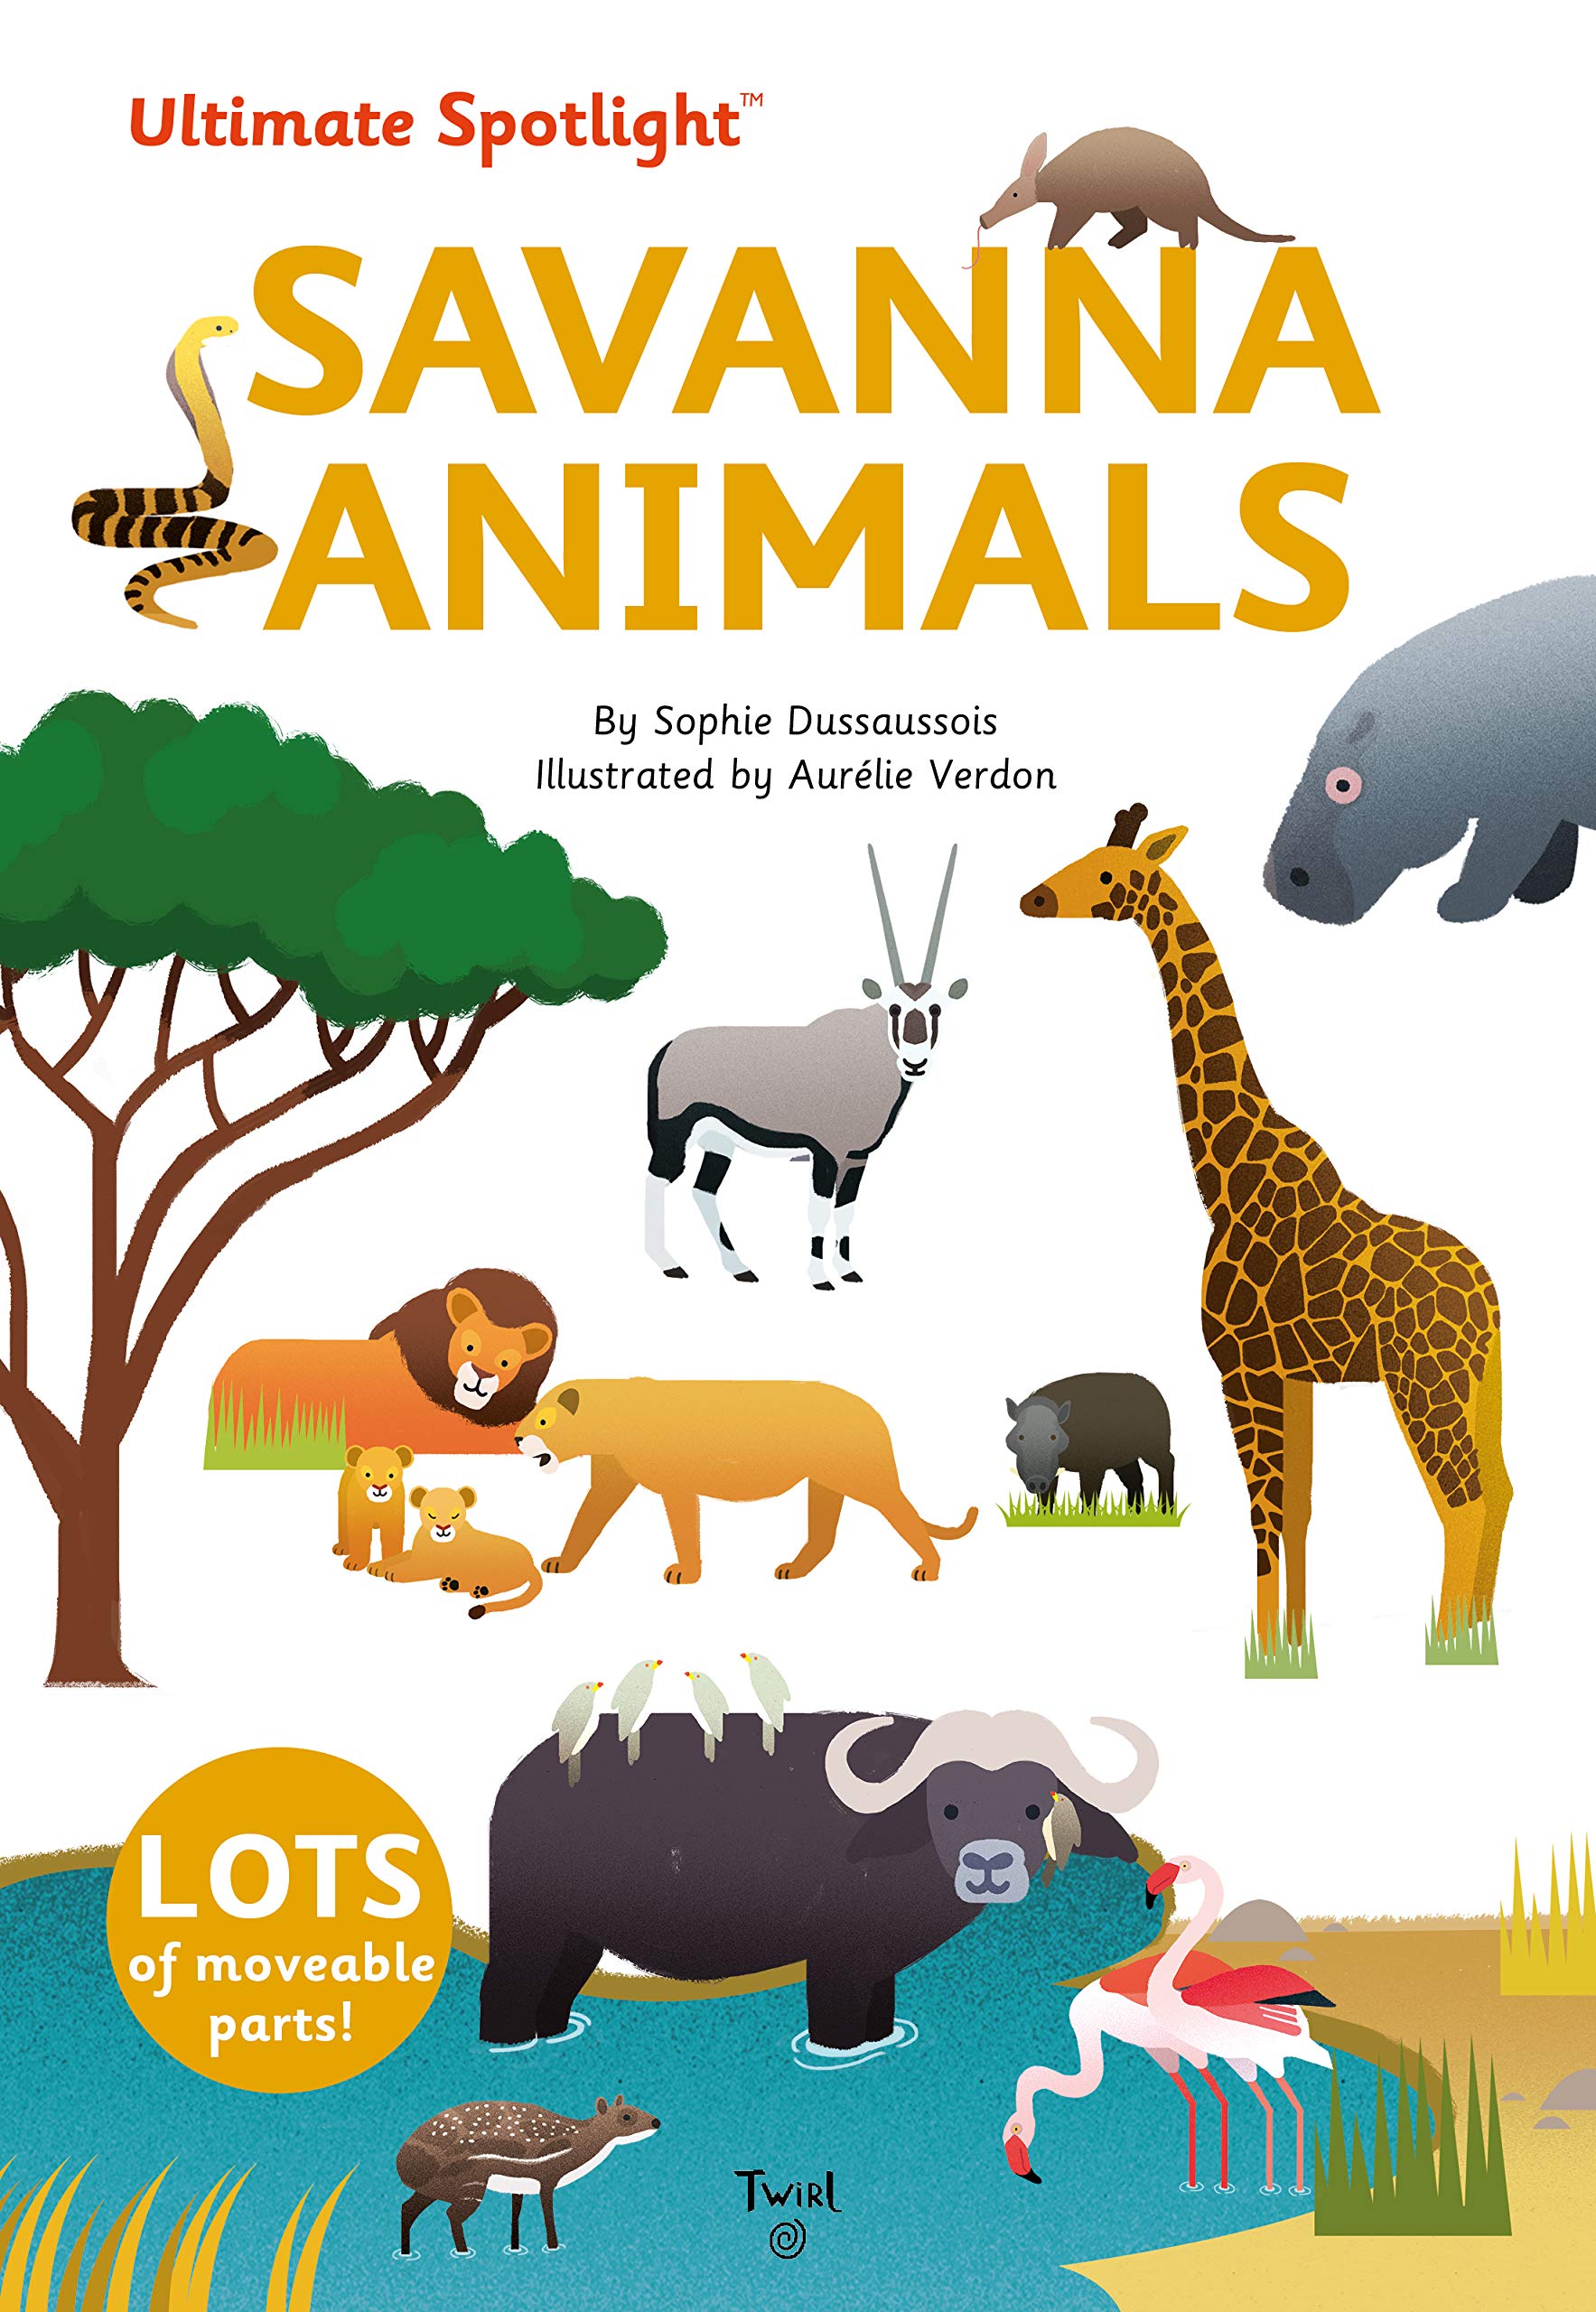 Ultimate Spotlight: Savanna Animals (Hardcover)